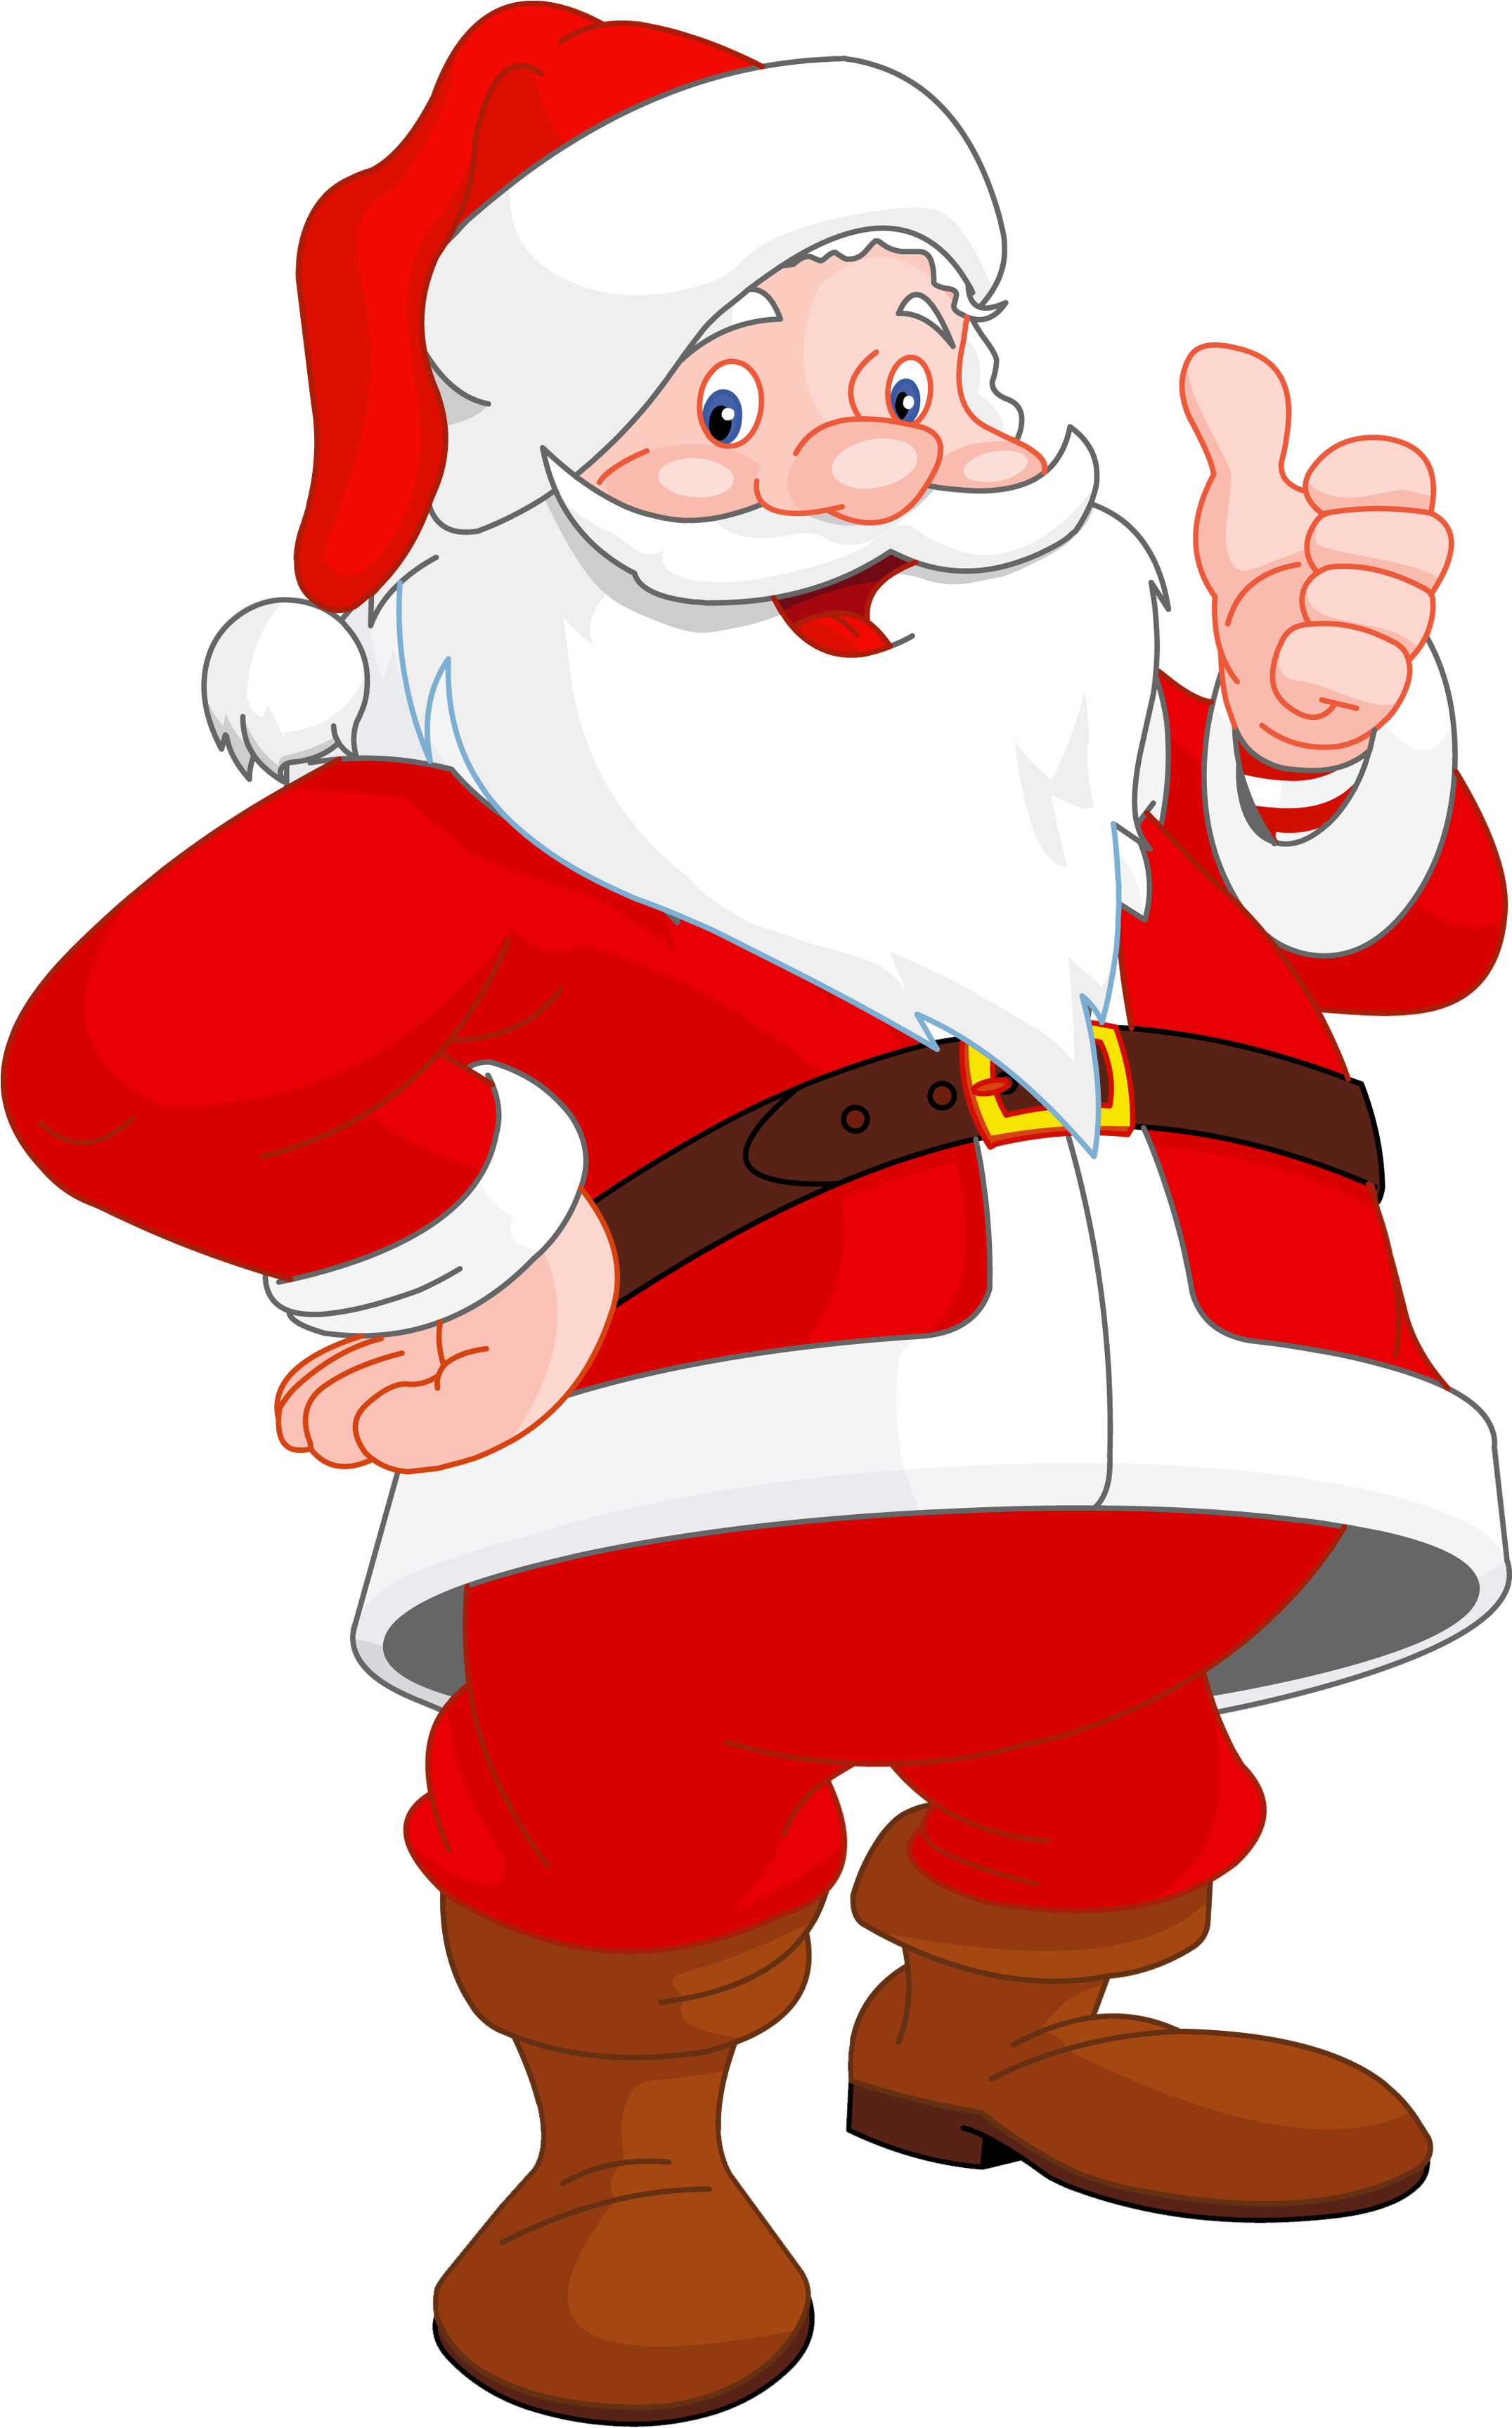 A Cartoon Of A Santa Claus Giving A Thumbs Up